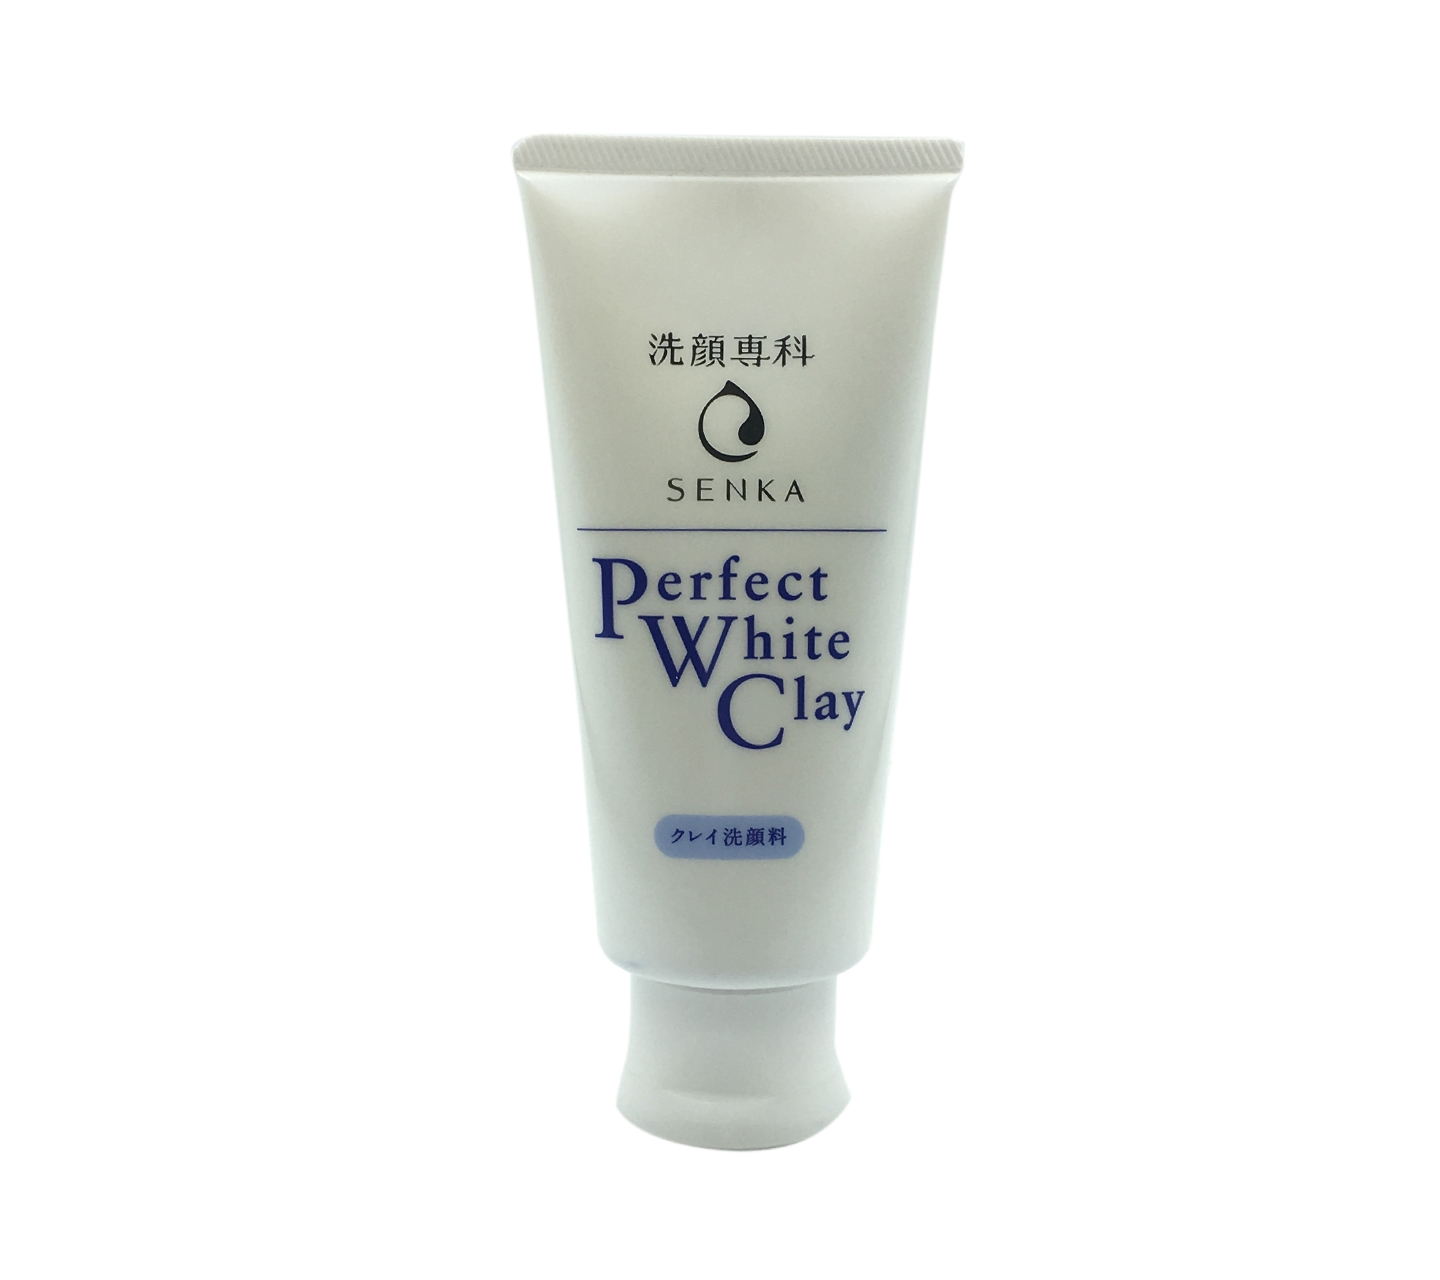 Senka Perfect White Clay Skin Care